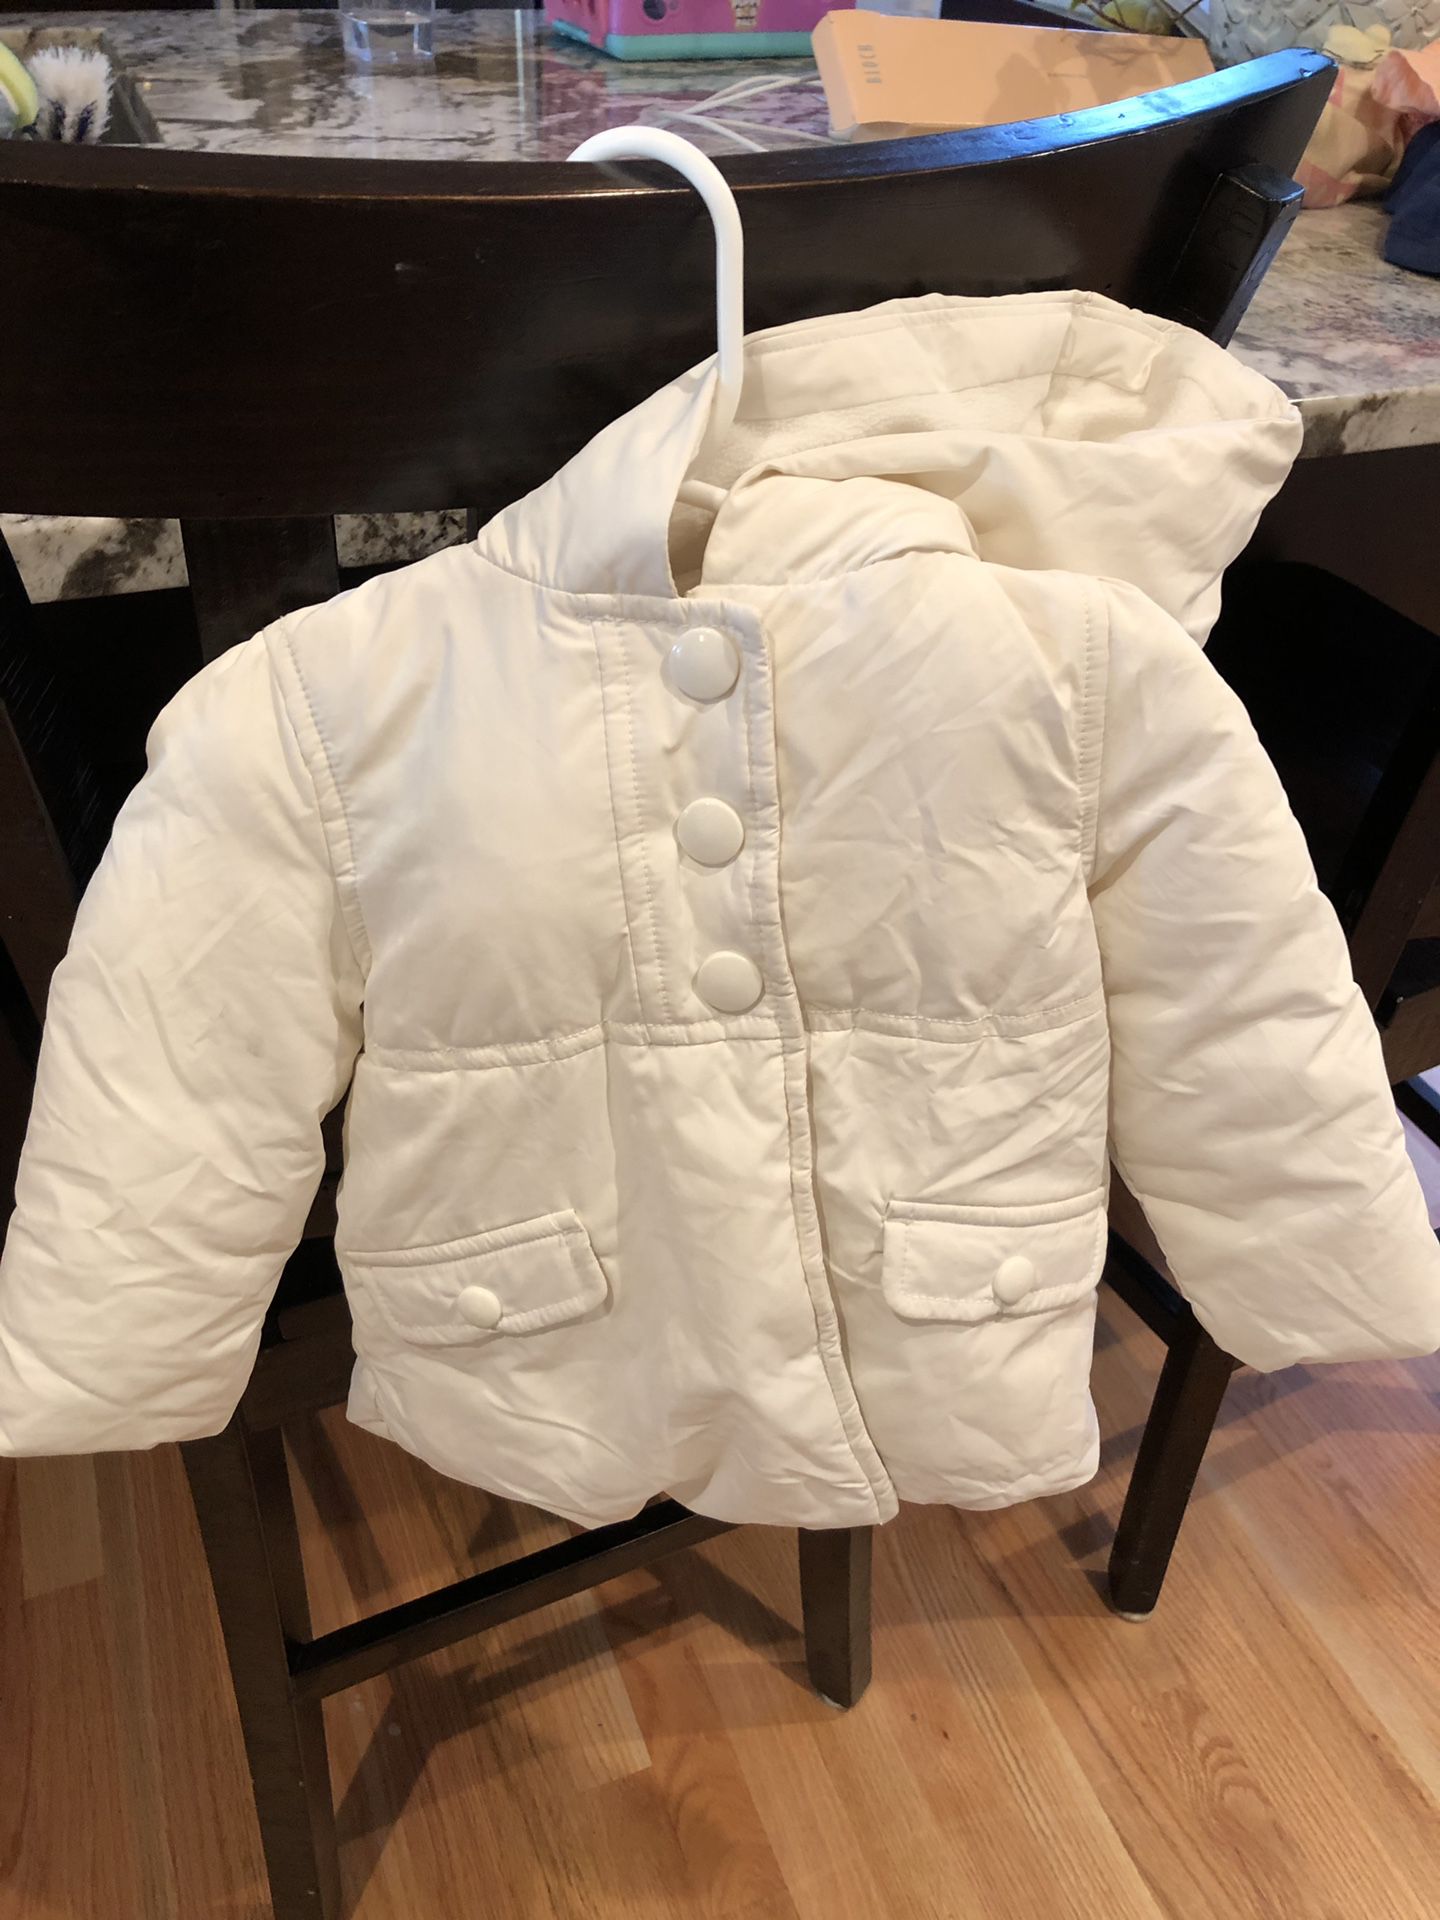 12-24 months girls winter jacket coat